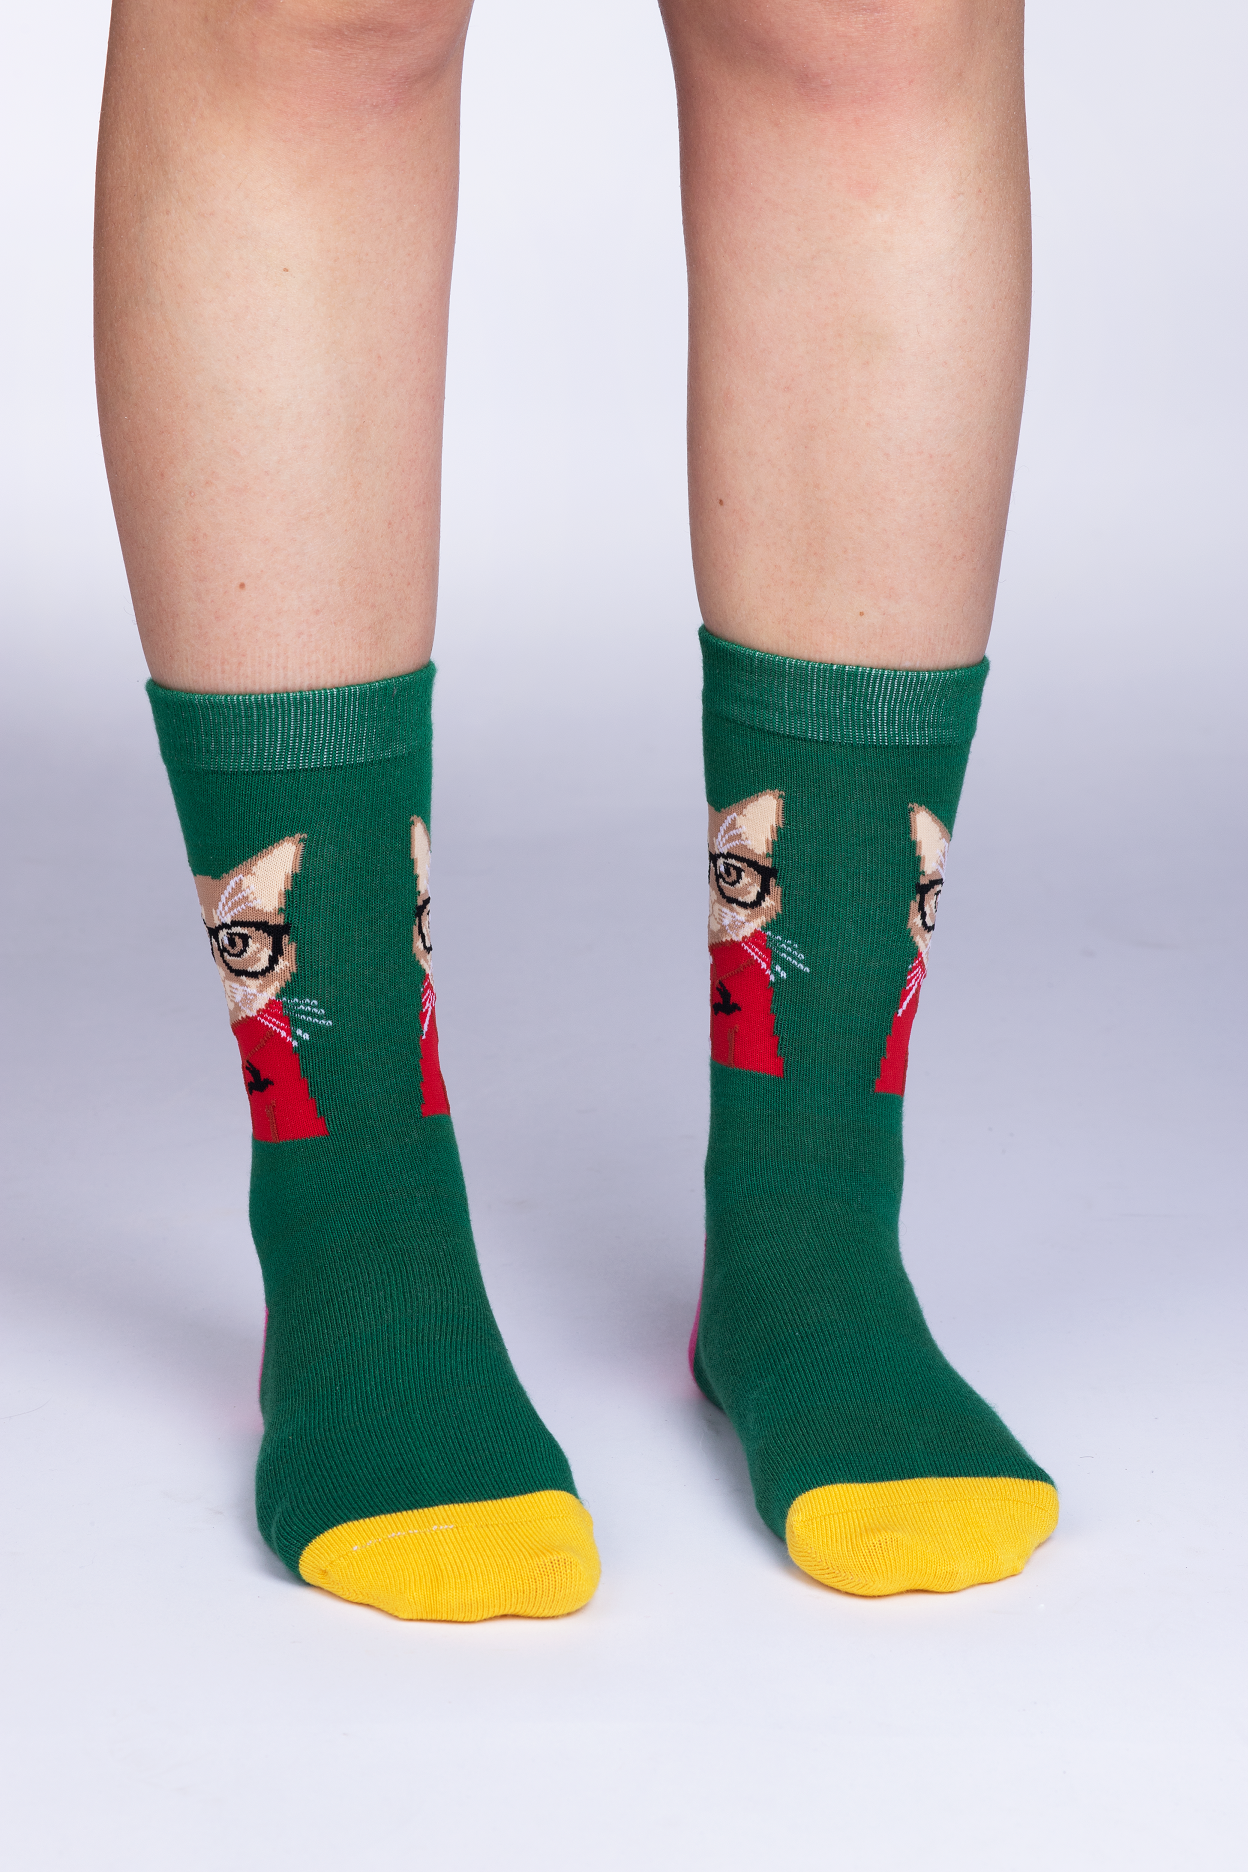 Fashionista Crew Socks: Stylish and Comfortable Bamboo Socks for Women